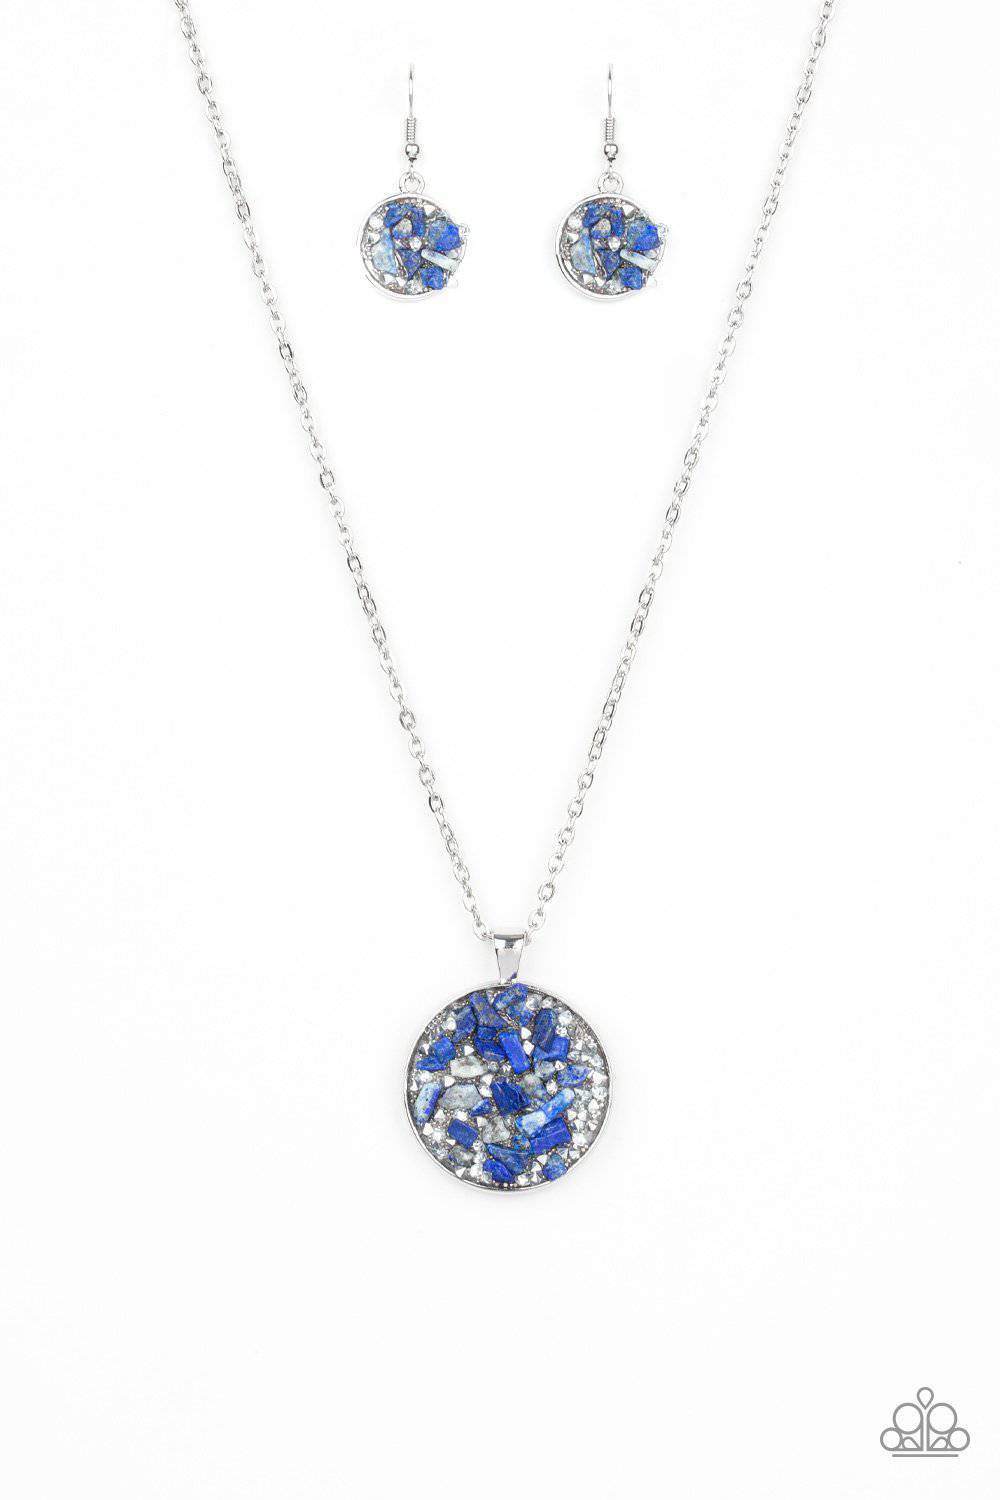 GLAM Crush Monday - Blue Metallic Rhinestone Necklace - Paparazzi Accessories - GlaMarous Titi Jewels